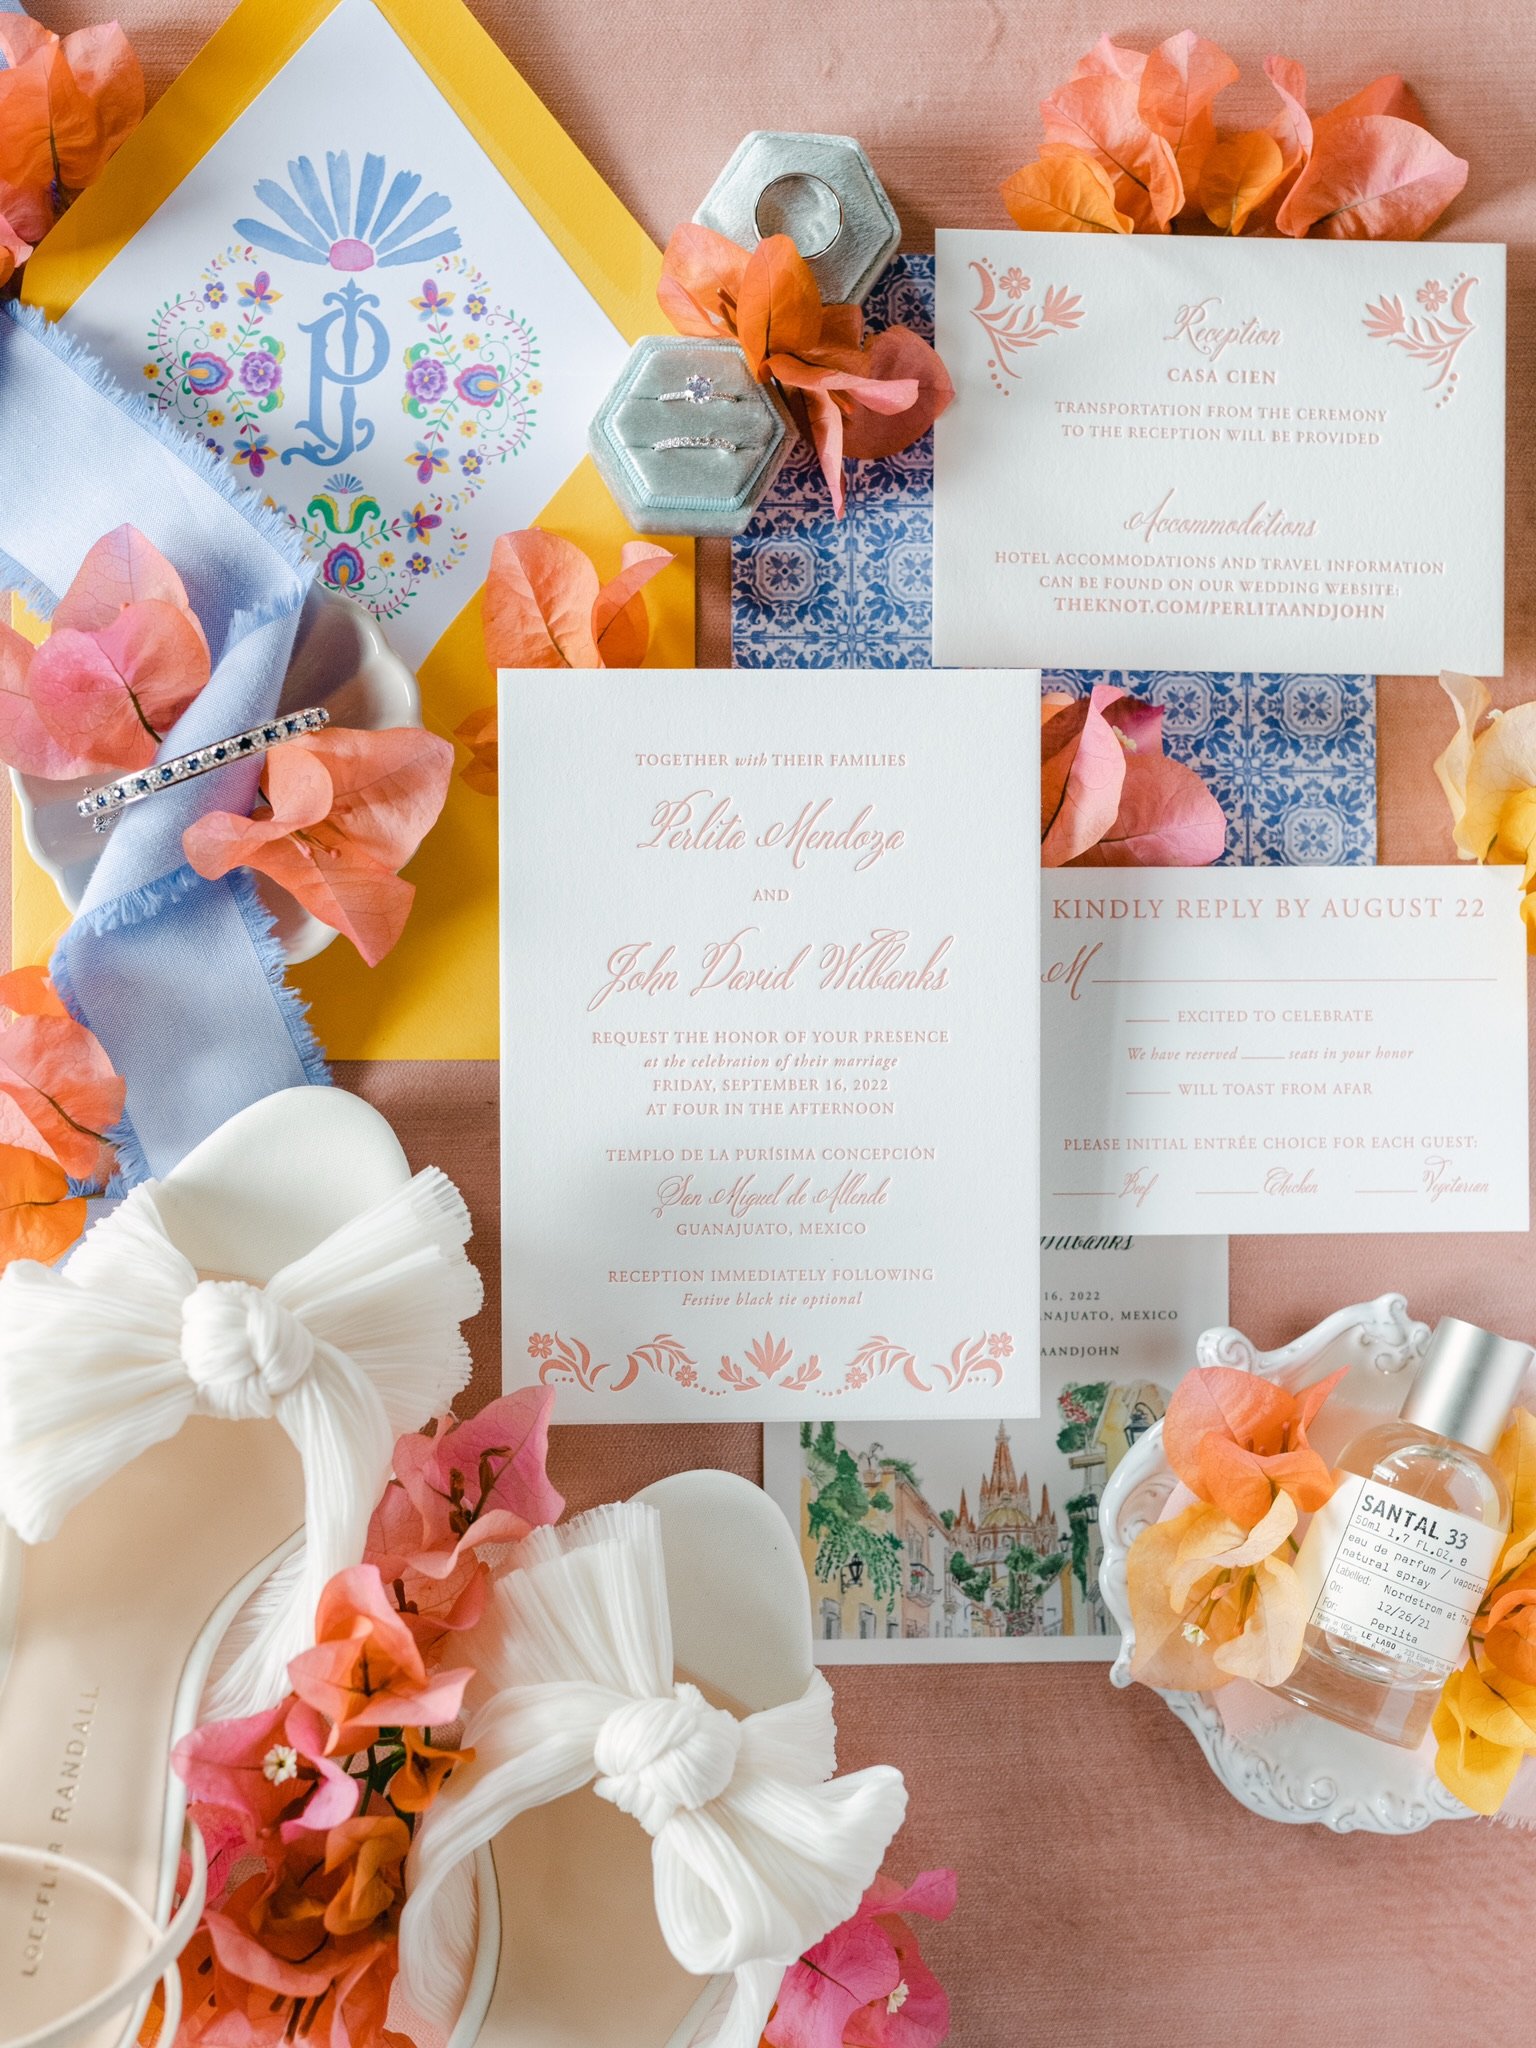 Pink-Champagne-Designs-Colorful-Mexico-Wedding-Invitation-Inspiration